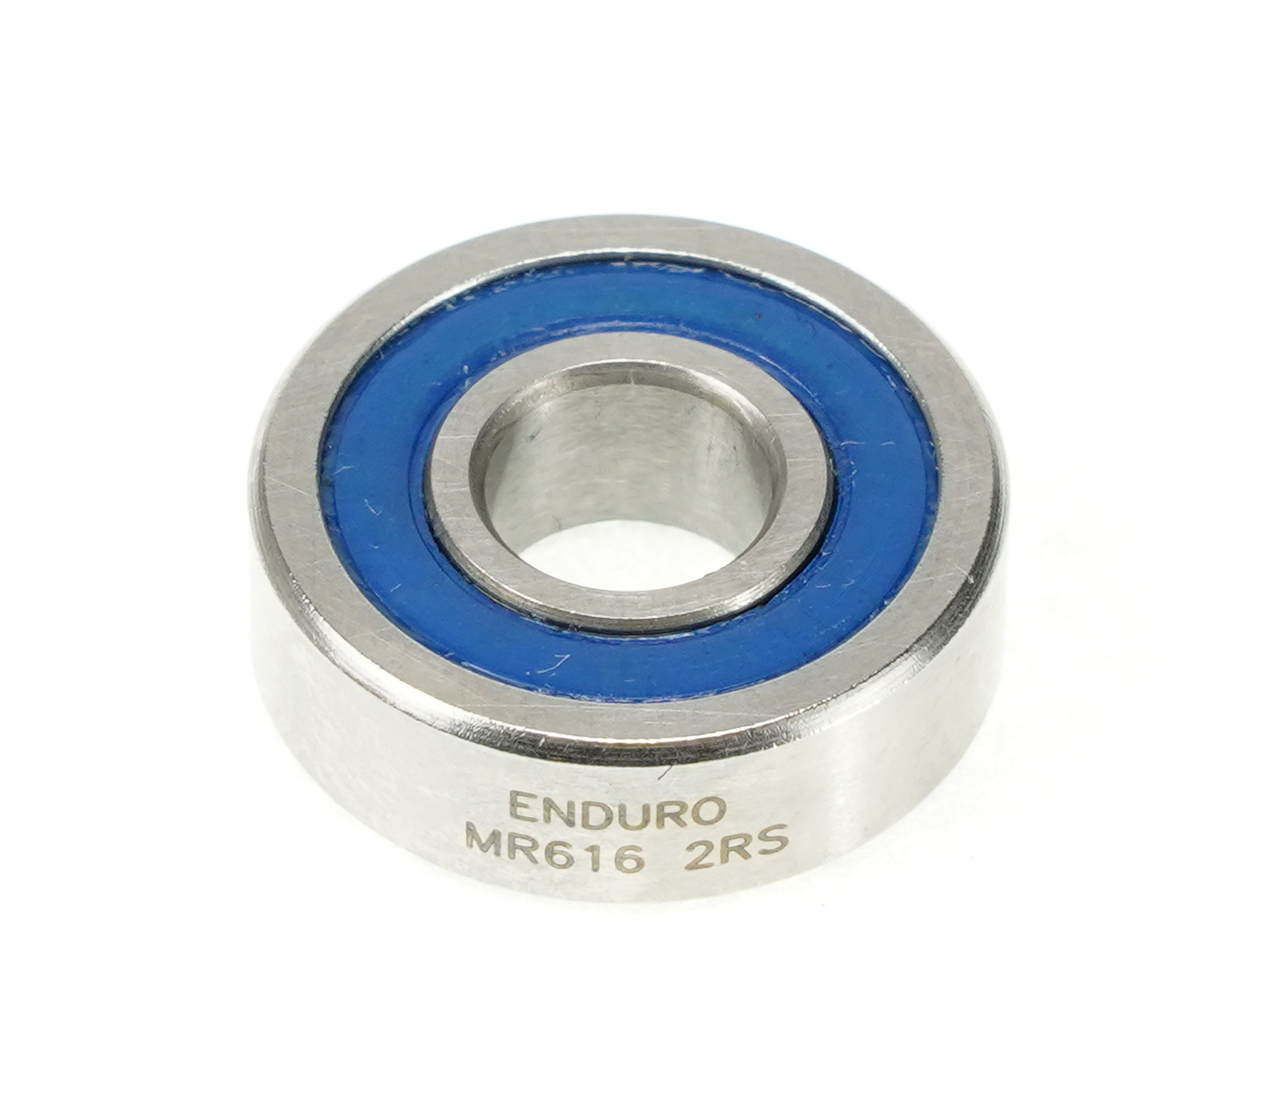 Enduro MR 616 2RS - ABEC-3 Radial Bearing (C3 Clearance) - 6mm x 16mm x 5mm